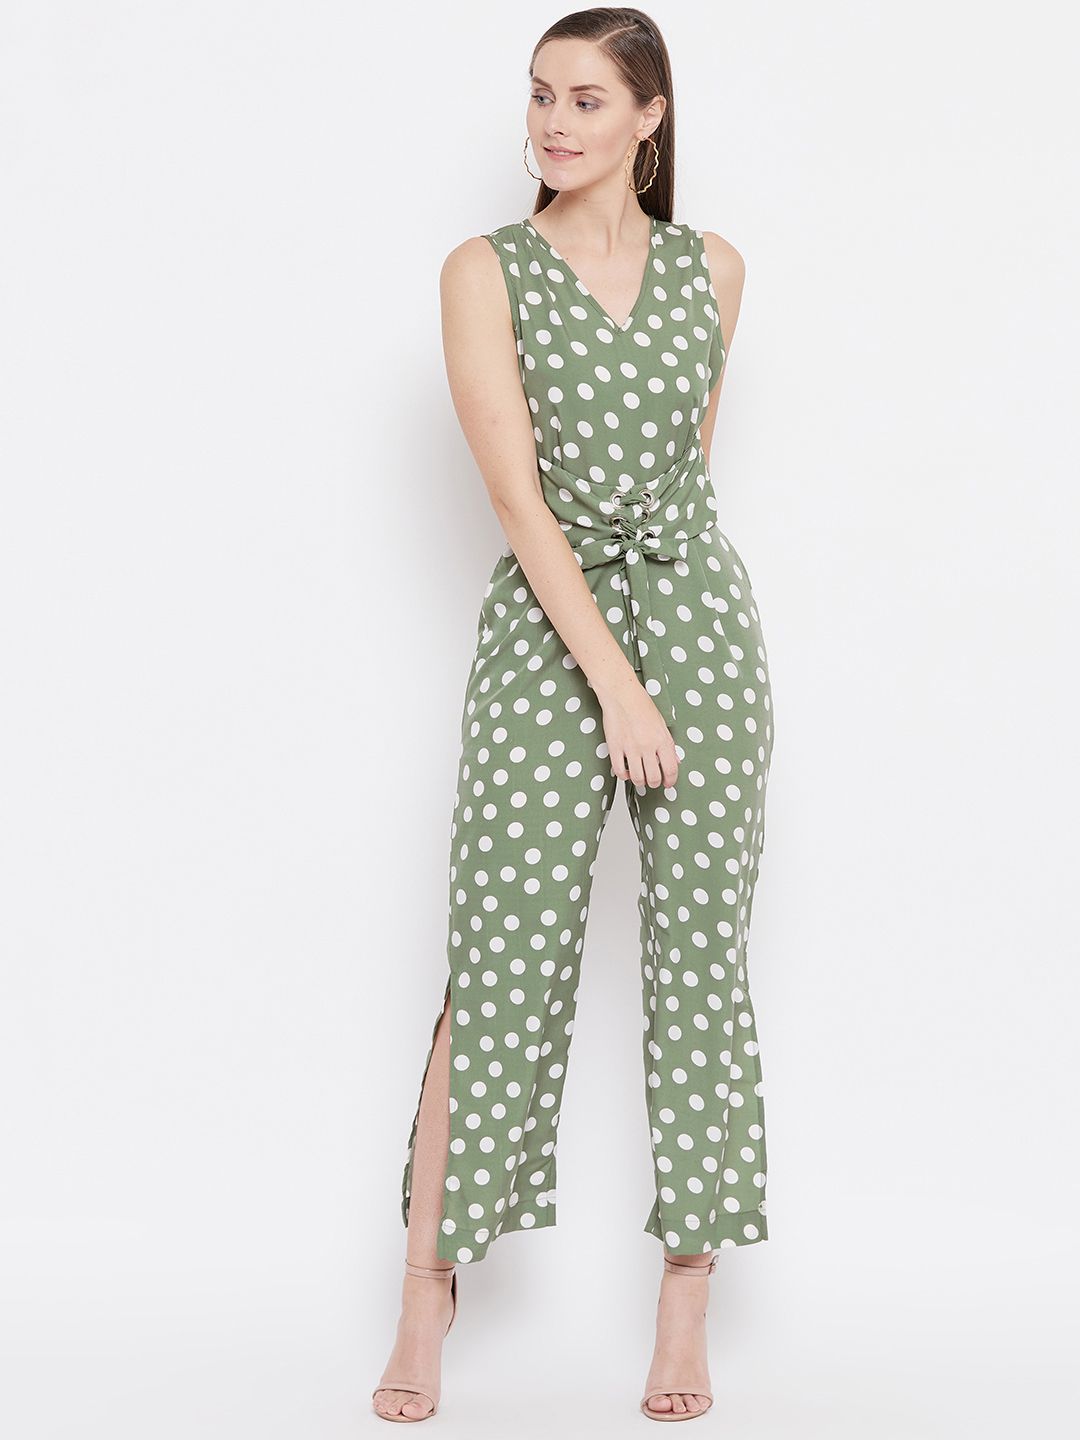 Belle Fille Women Olive Green & White Polka Dot Print Basic Jumpsuit Price in India